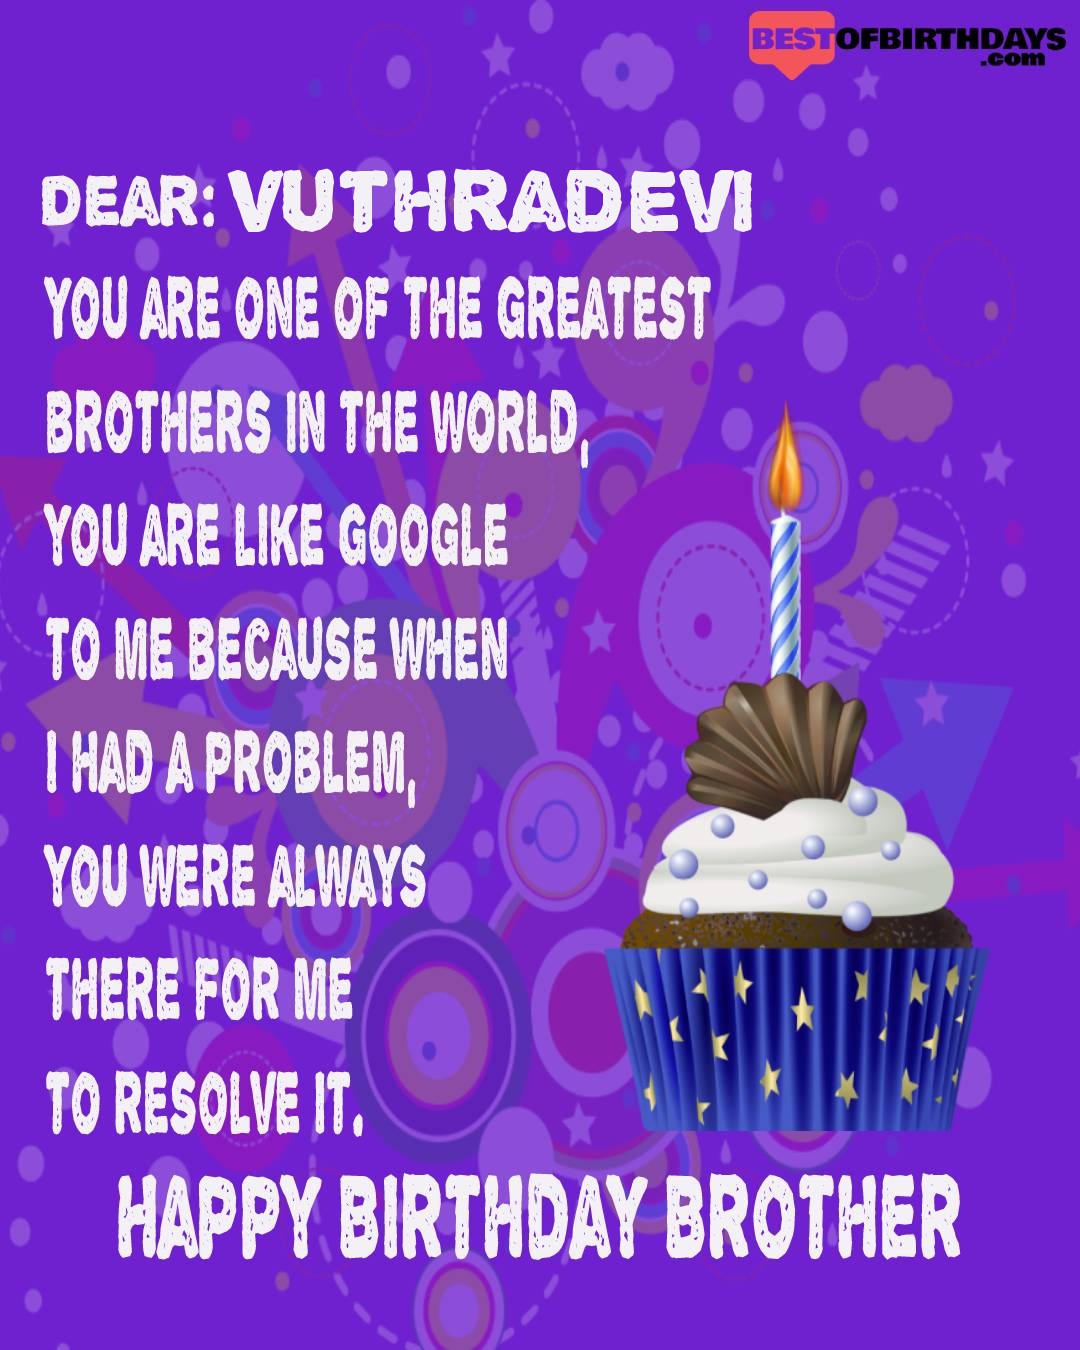 Happy birthday vuthradevi bhai brother bro